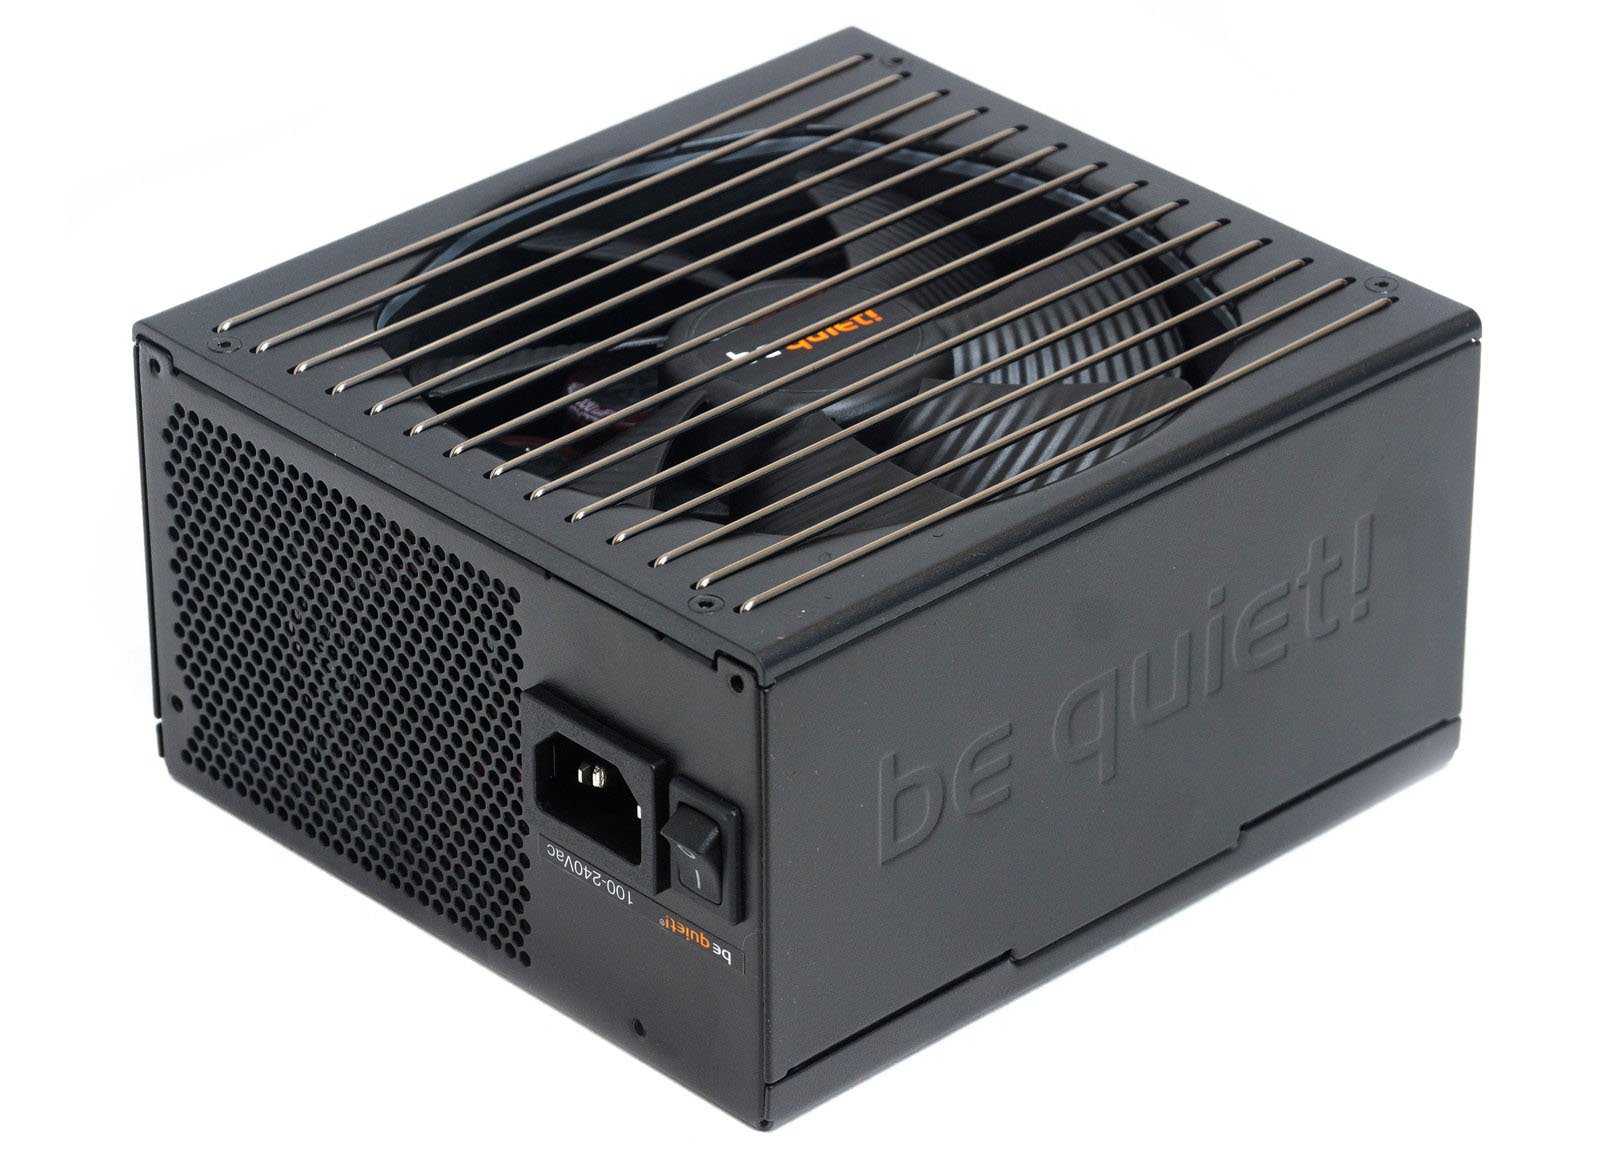 Блок питания be quiet! straight power 11 450w — купить, цена и характеристики, отзывы